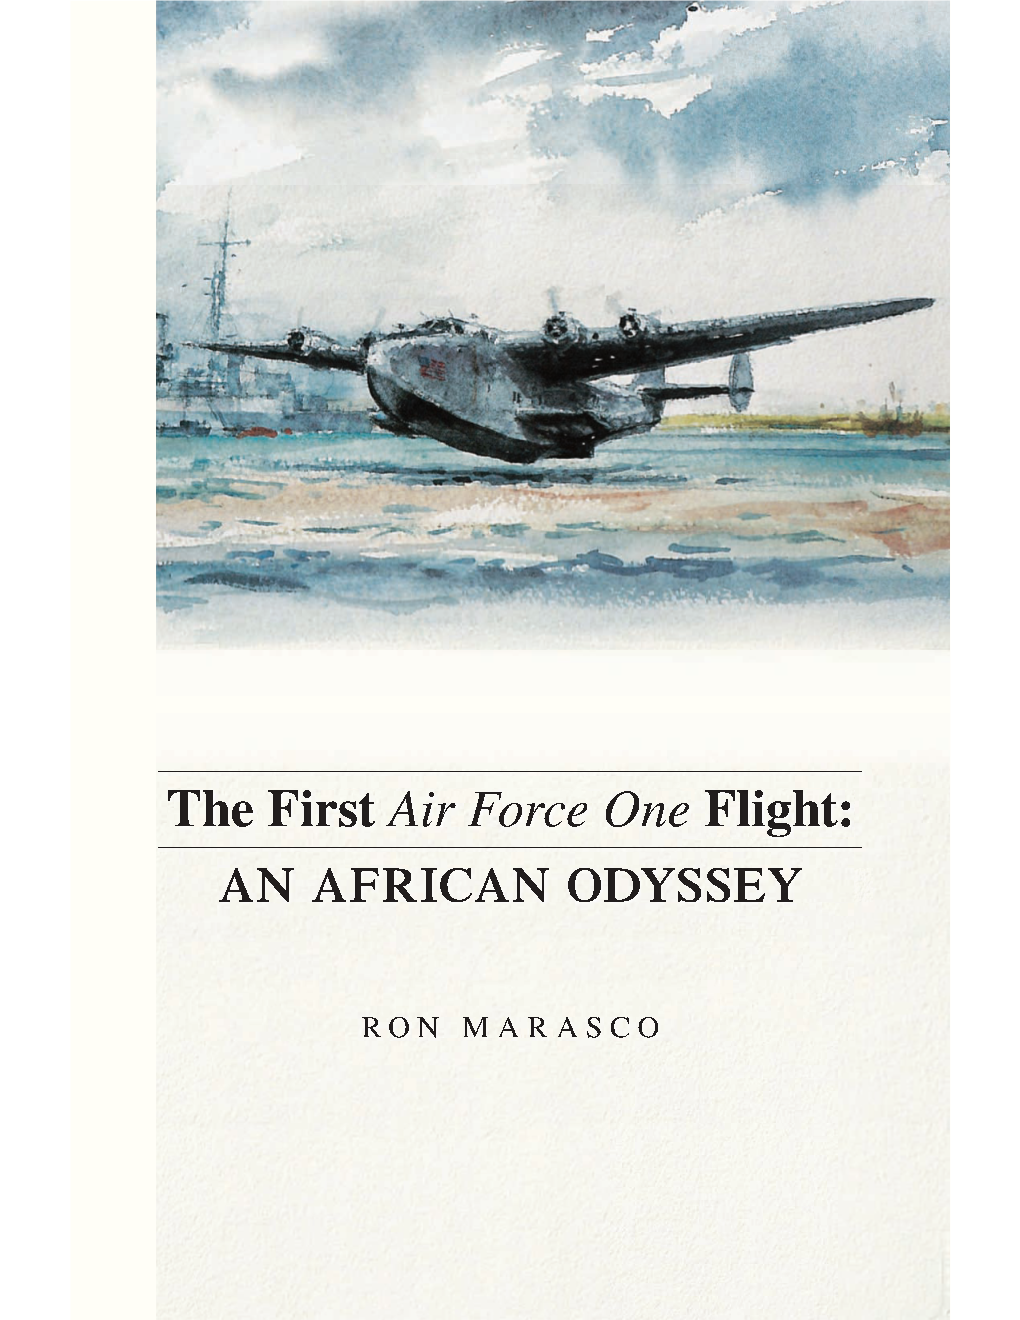 Air Force One Flight: an AFRICAN ODYSSEY